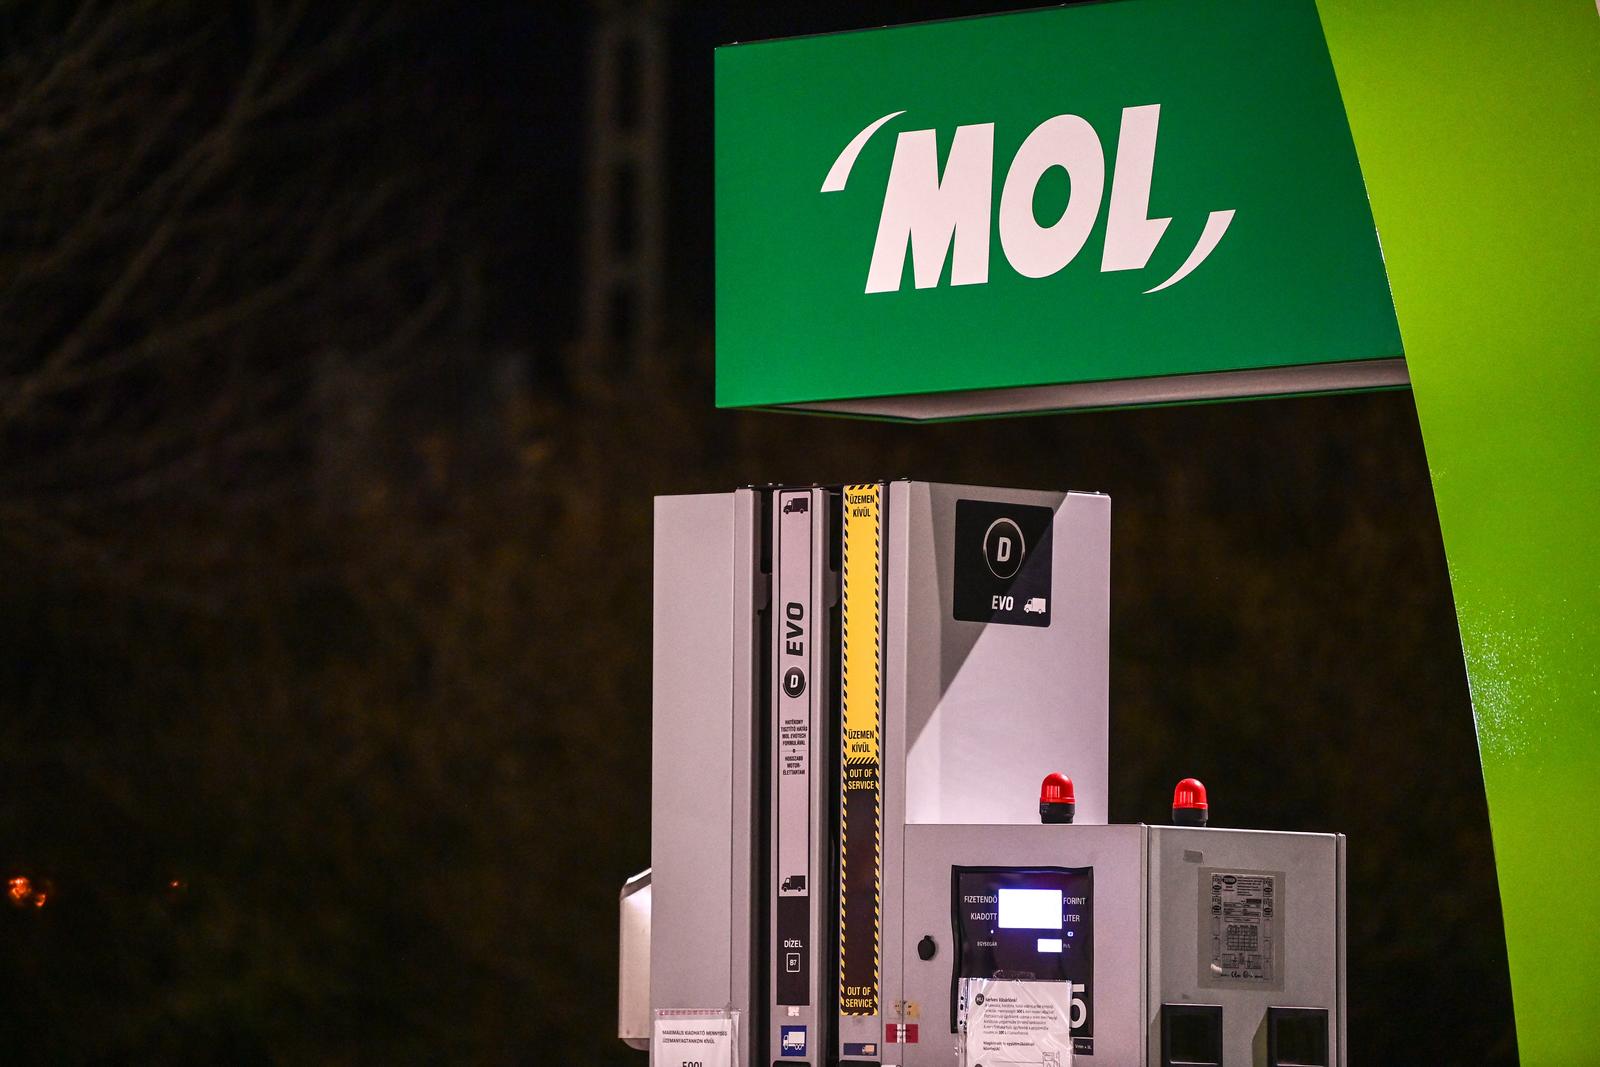 06.03.2022., Madjarska, Zahony, - MOL benzinska pumpa. Photo: Igor Soban/PIXSELL